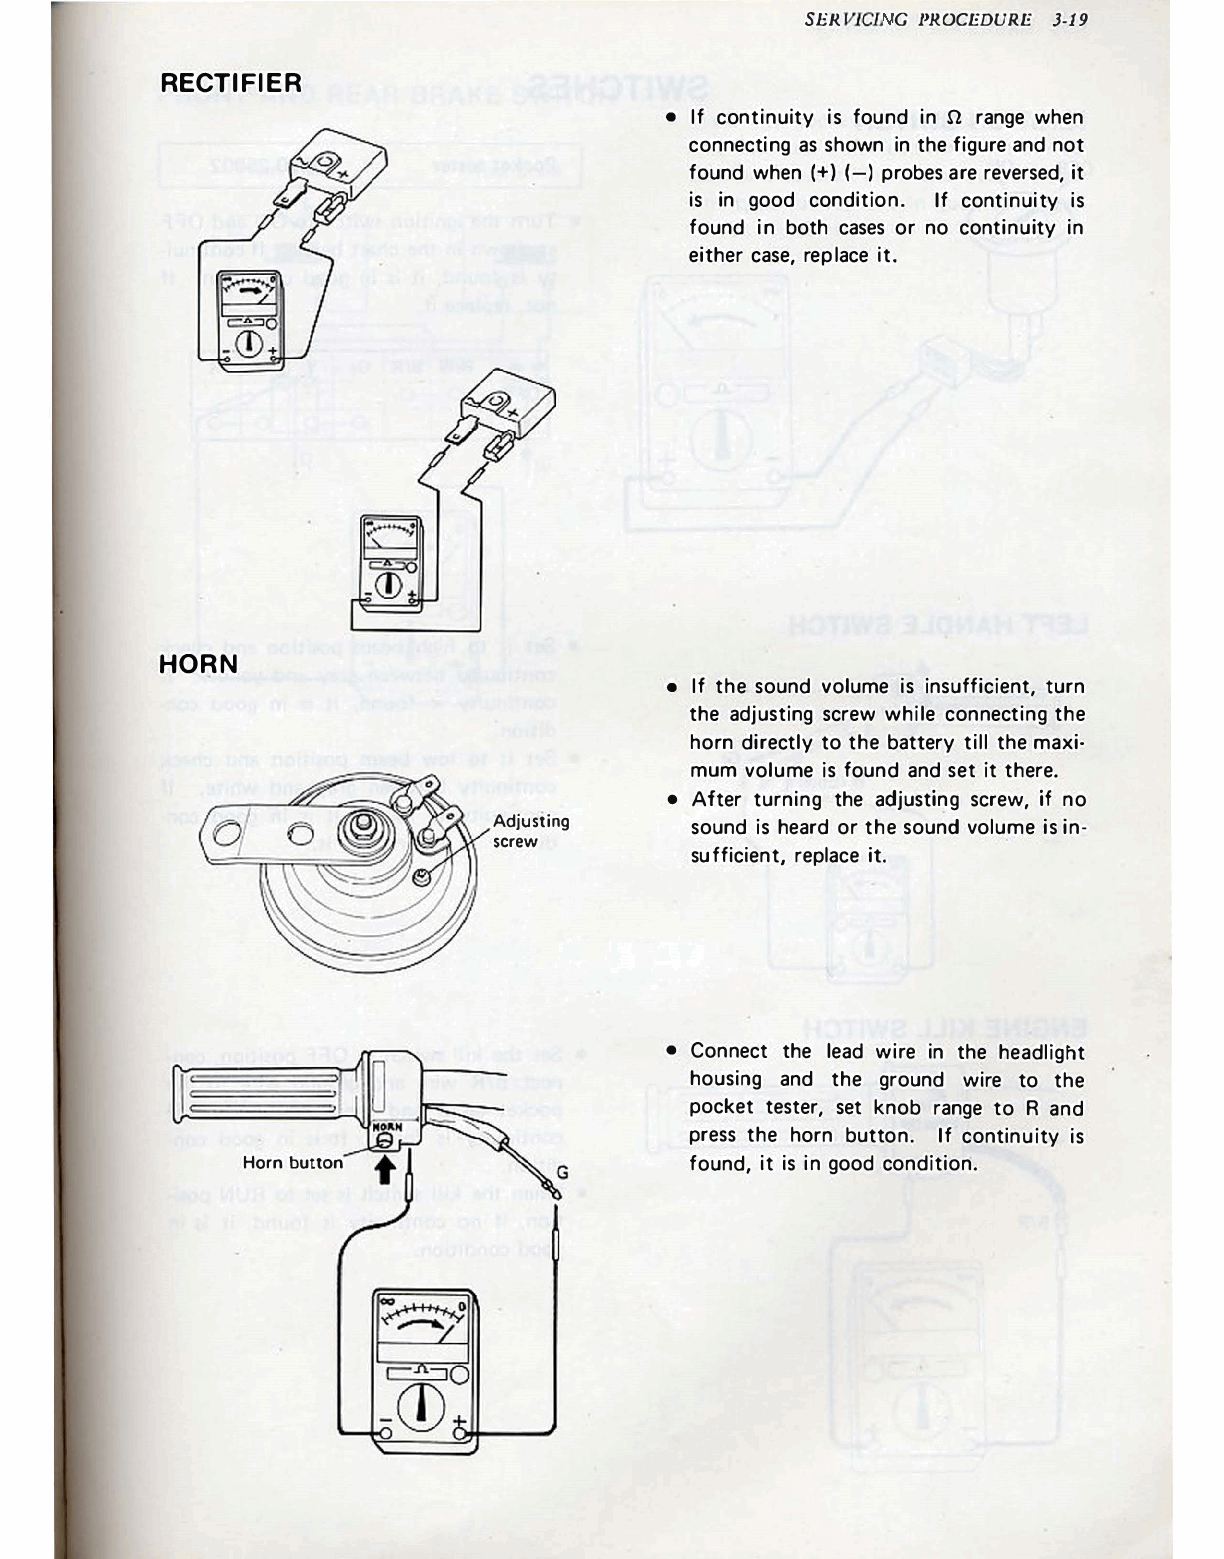 1979-1983 FZ50 Moped Service Manual